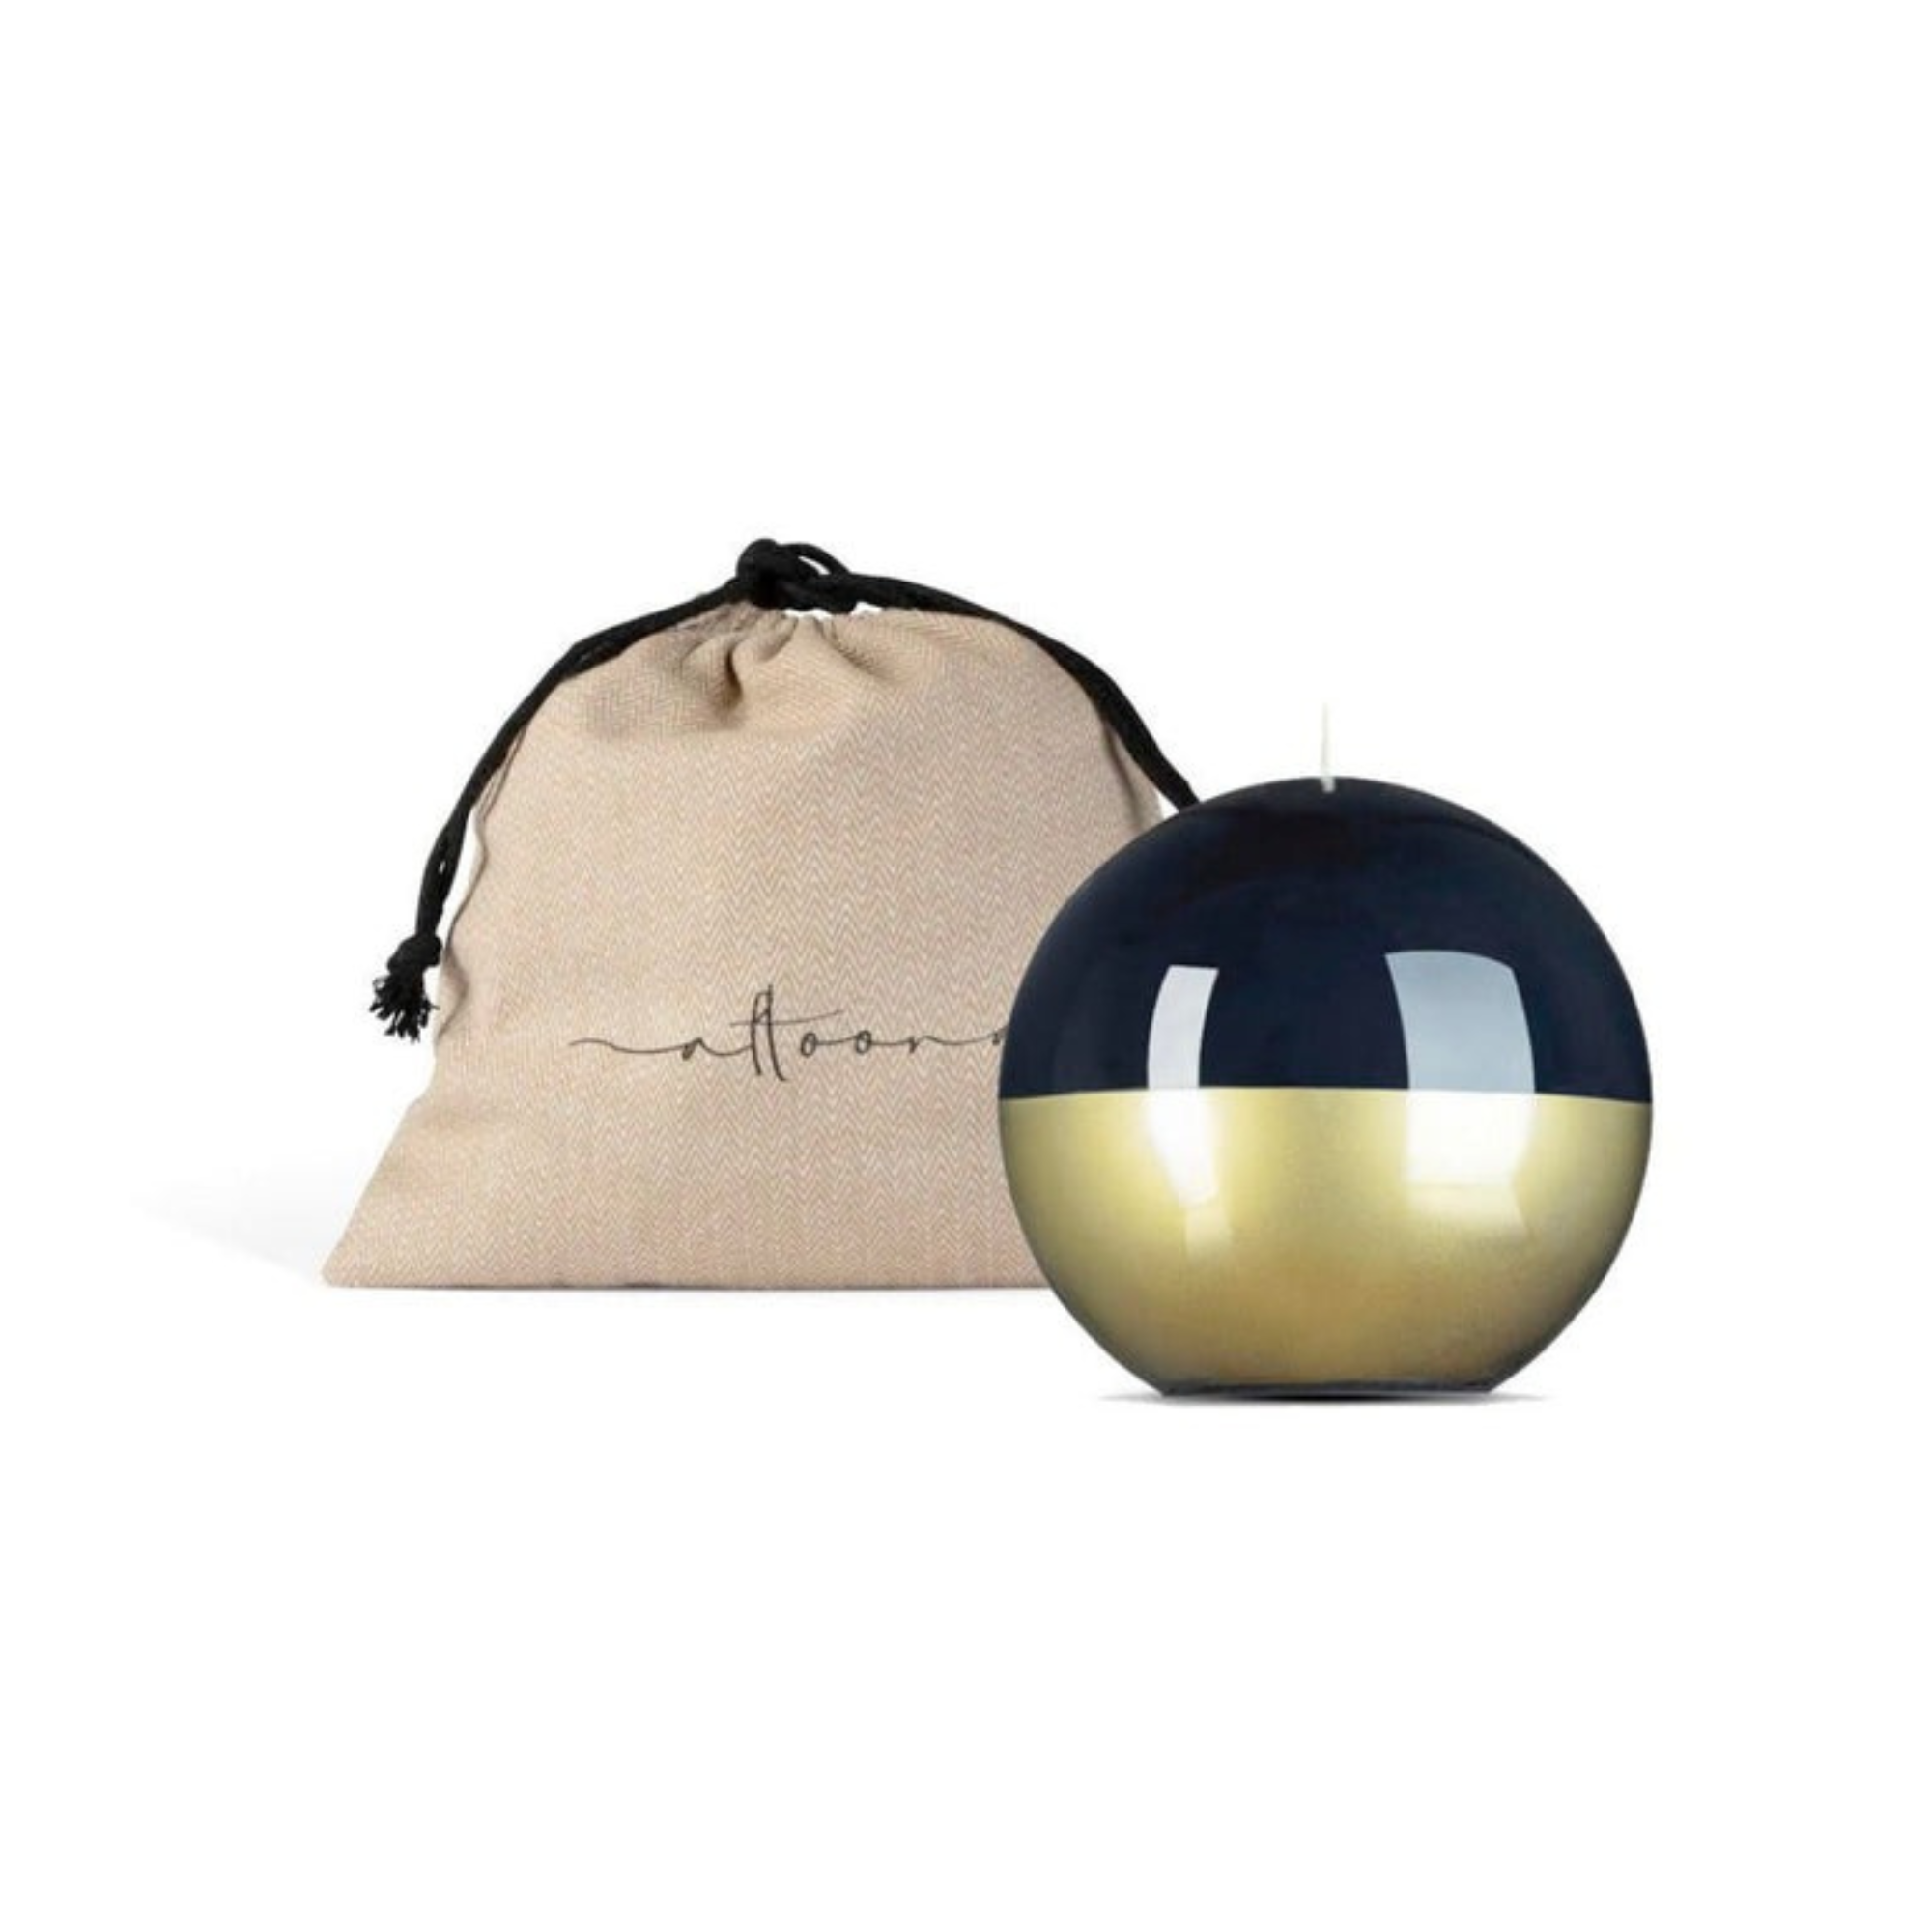 4 inch High Gloss Metallic Candle Sphere Black & Gold